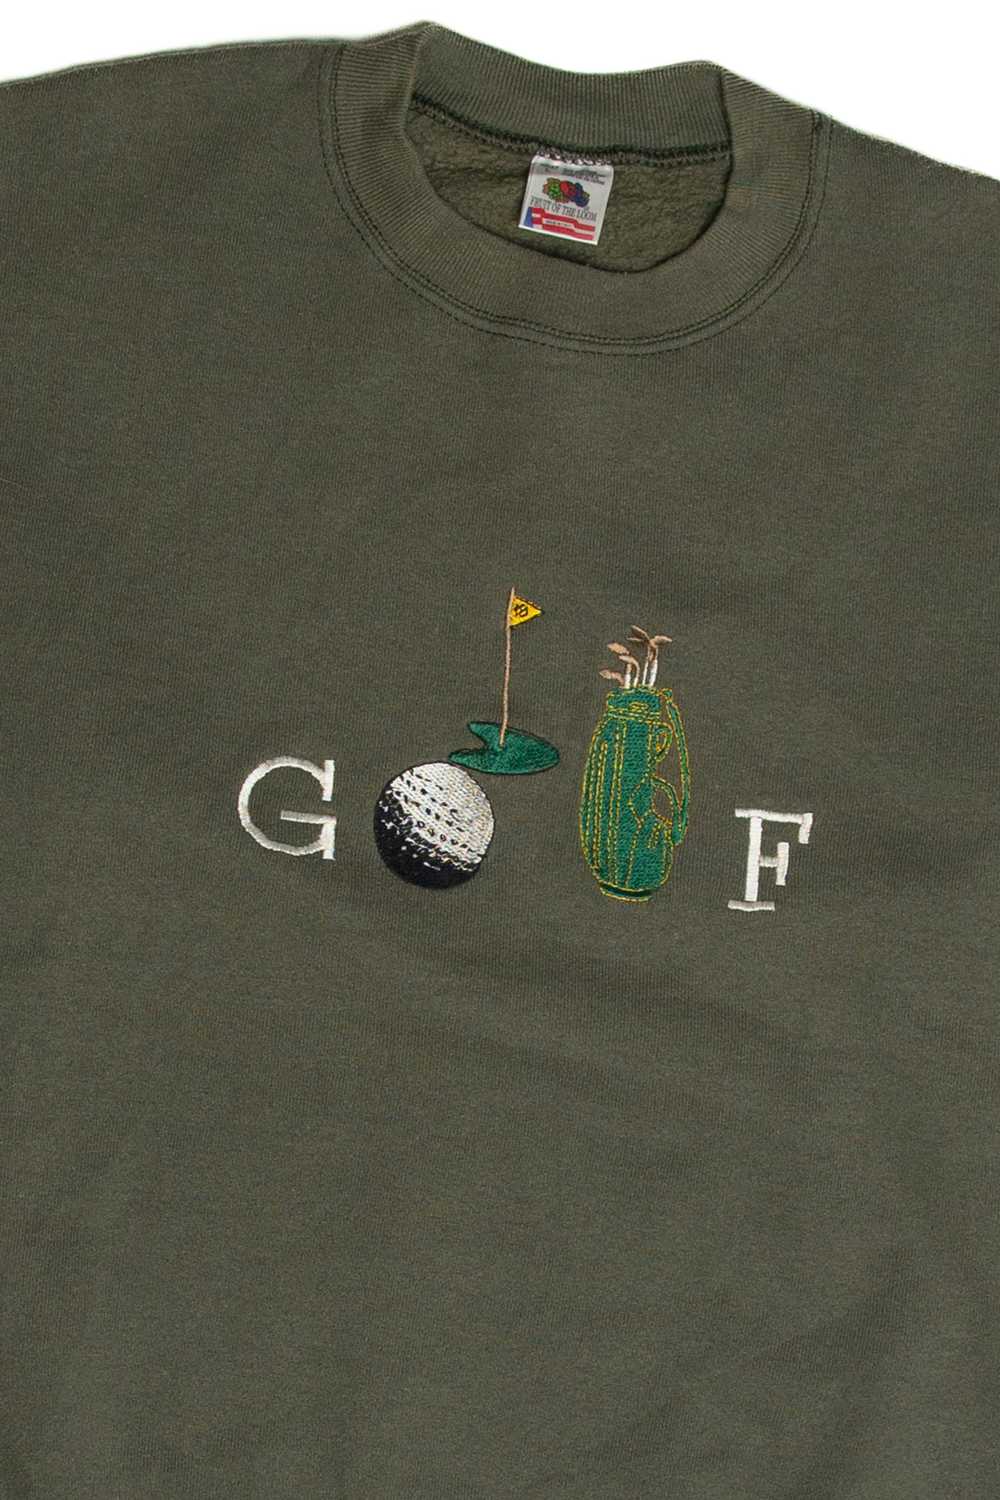 Vintage Golf Embroidered Sweatshirt - image 2